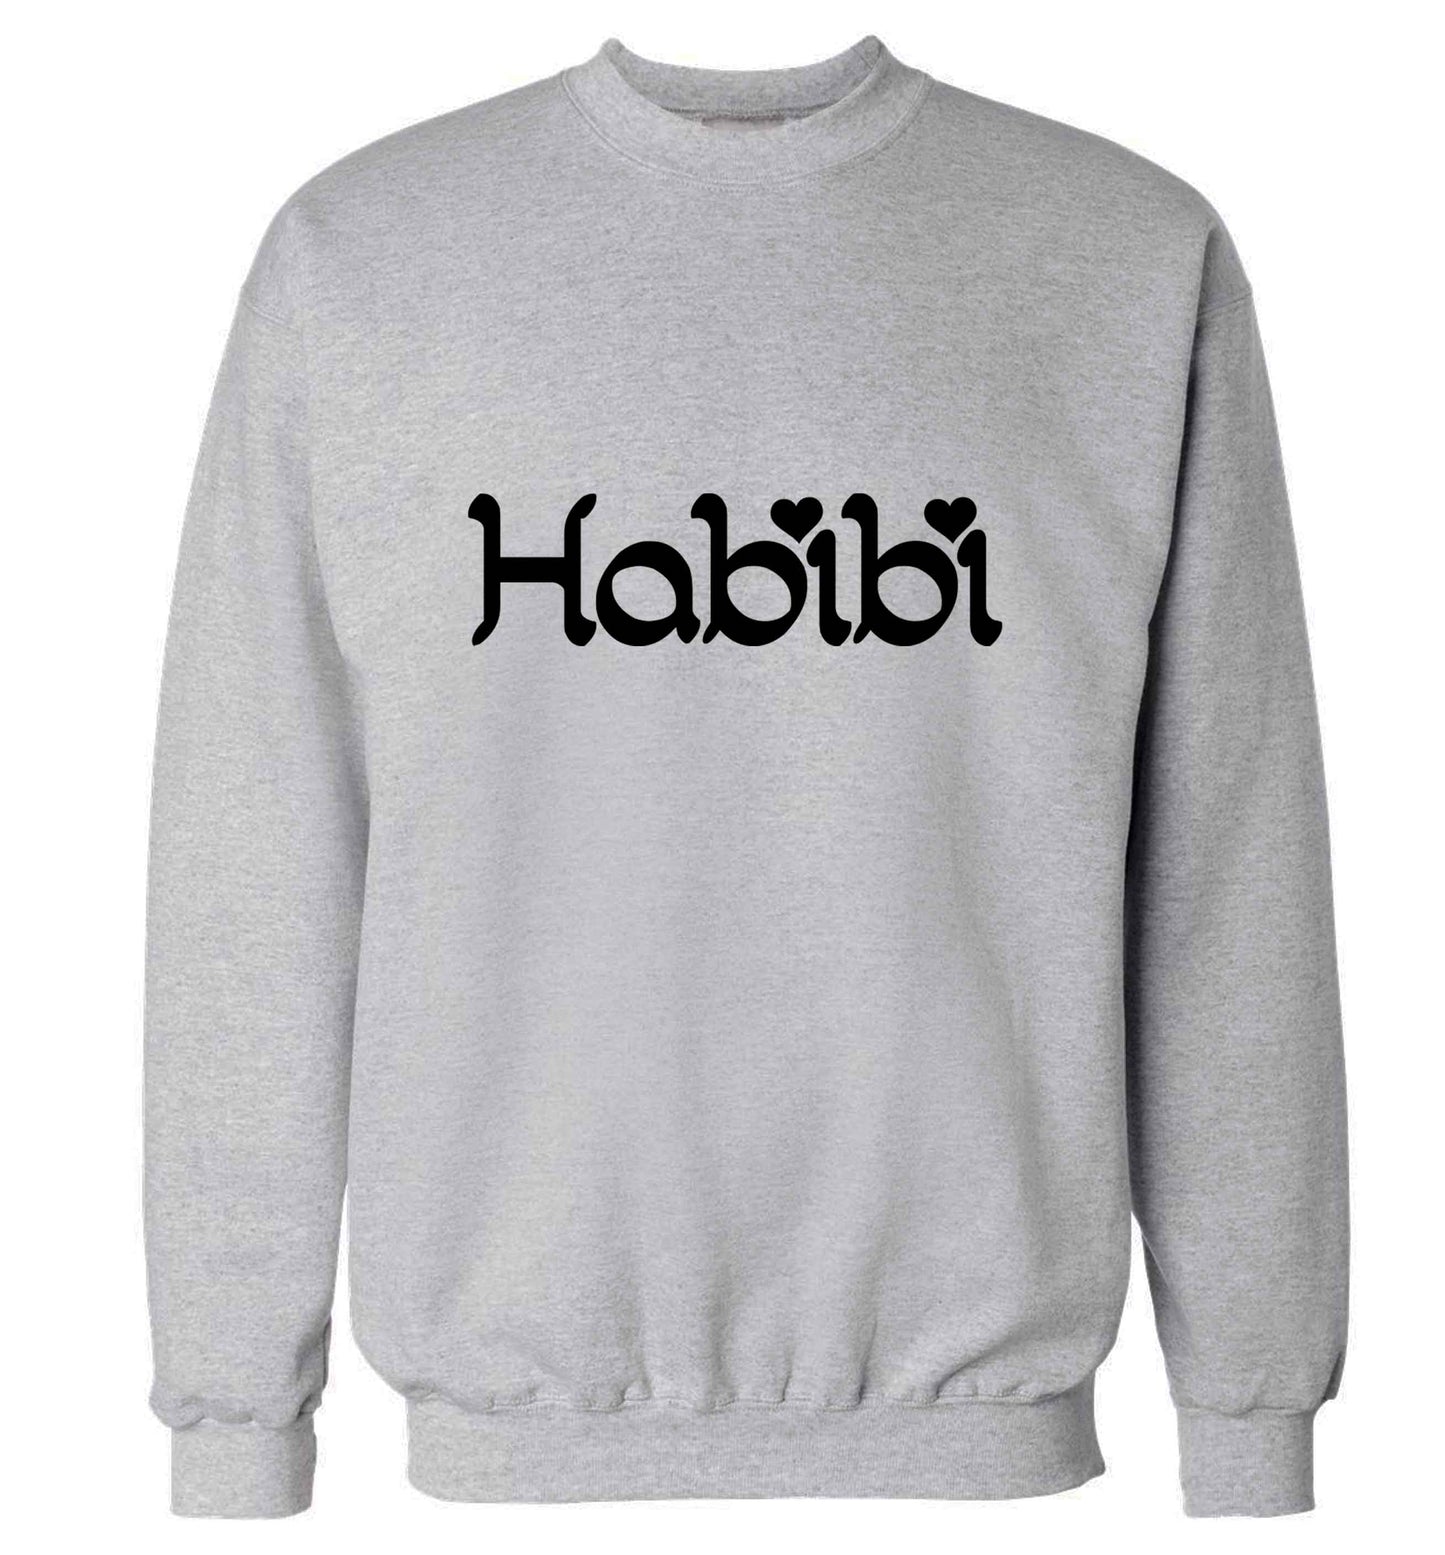 Habibi adult's unisex grey sweater 2XL